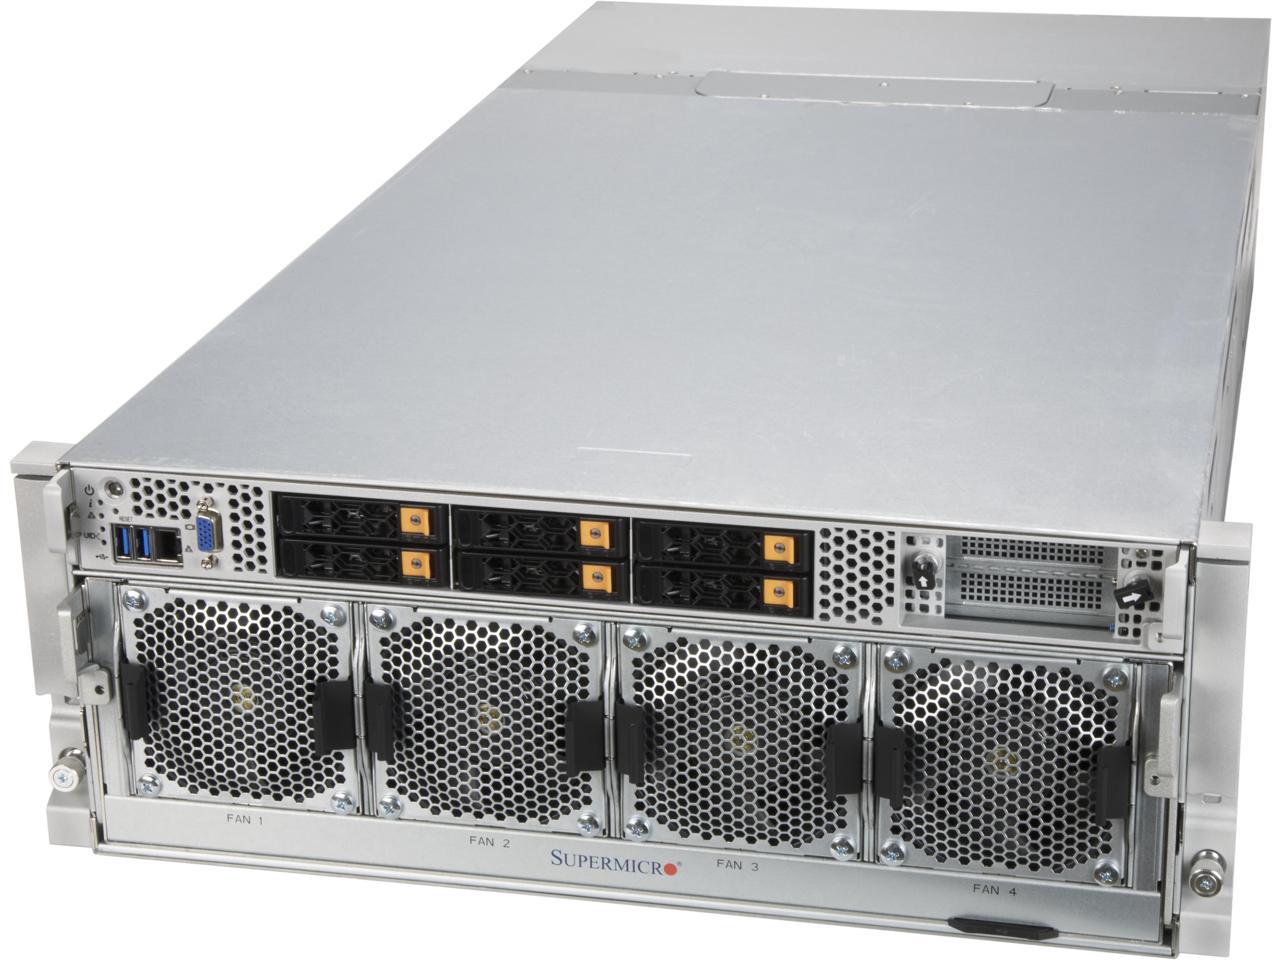 SUPERMICRO SYS-420GP-TNAR 4U Rackmount Server